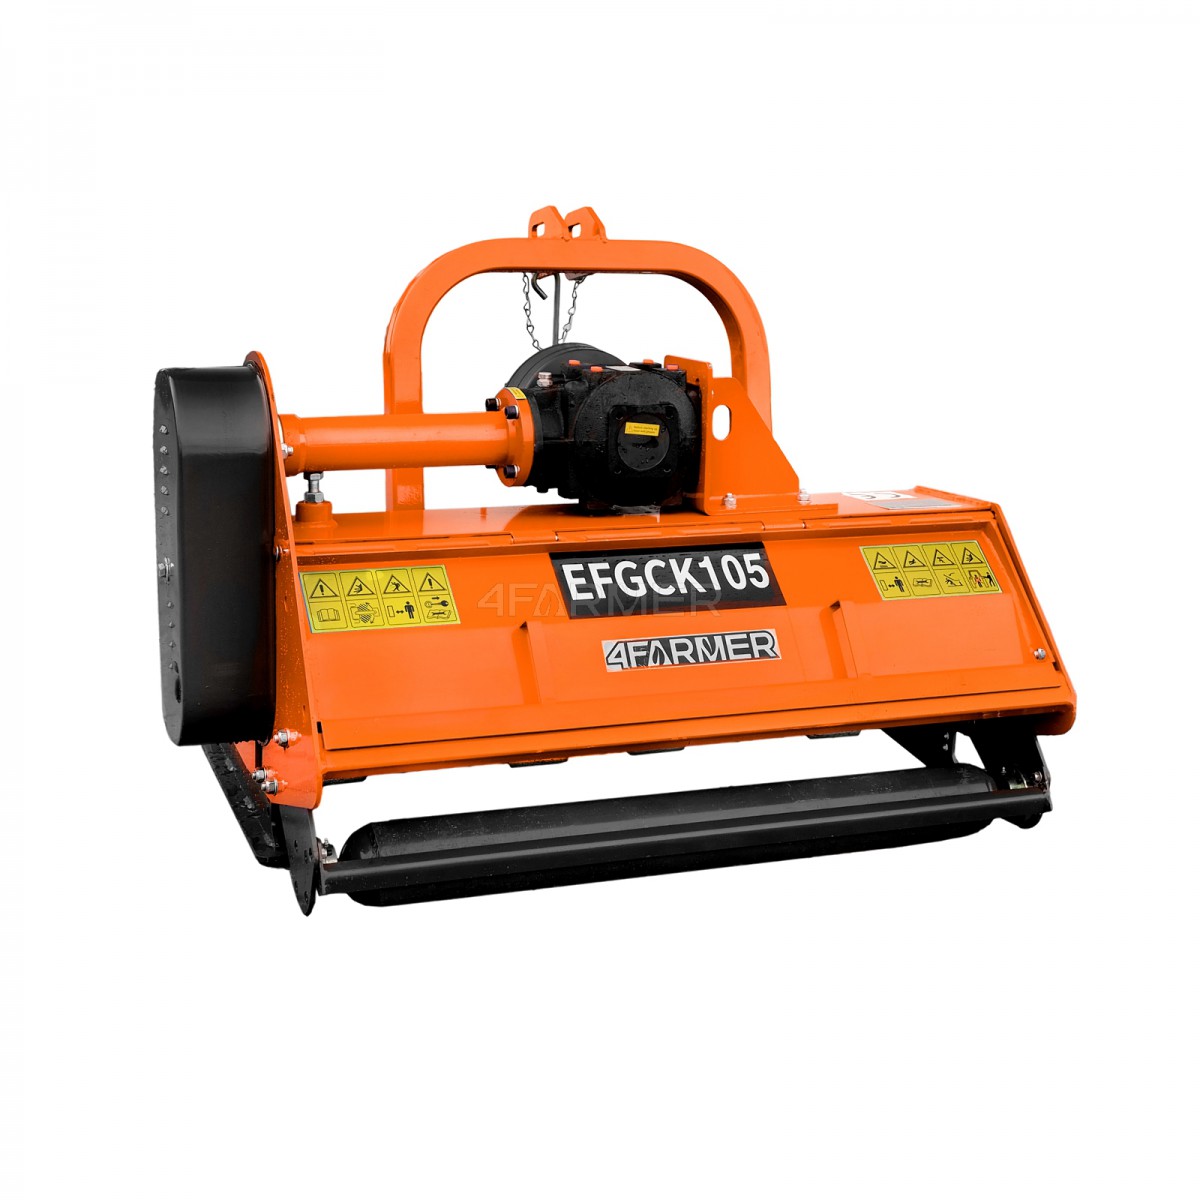 EFGC-K 105 flail mower with opening flap 4FARMER - orange